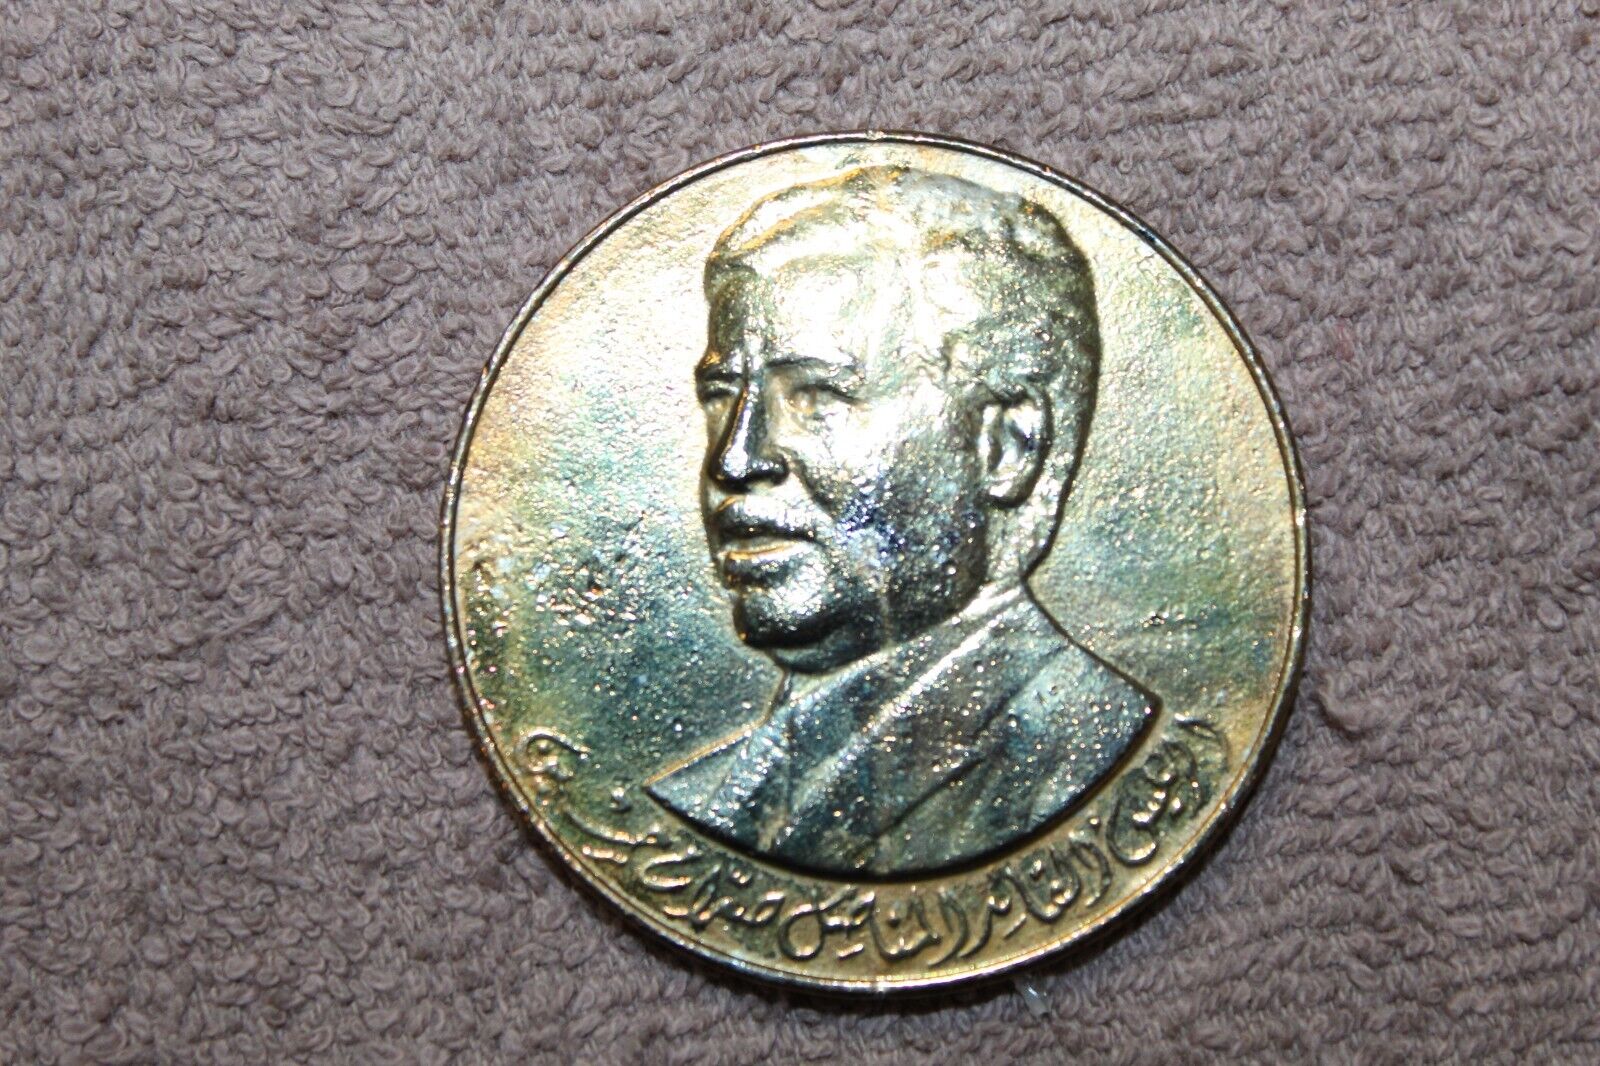 Original 1980s Era Saddam Hussein Medallion for 17th July 1968 Iraqi Revolution